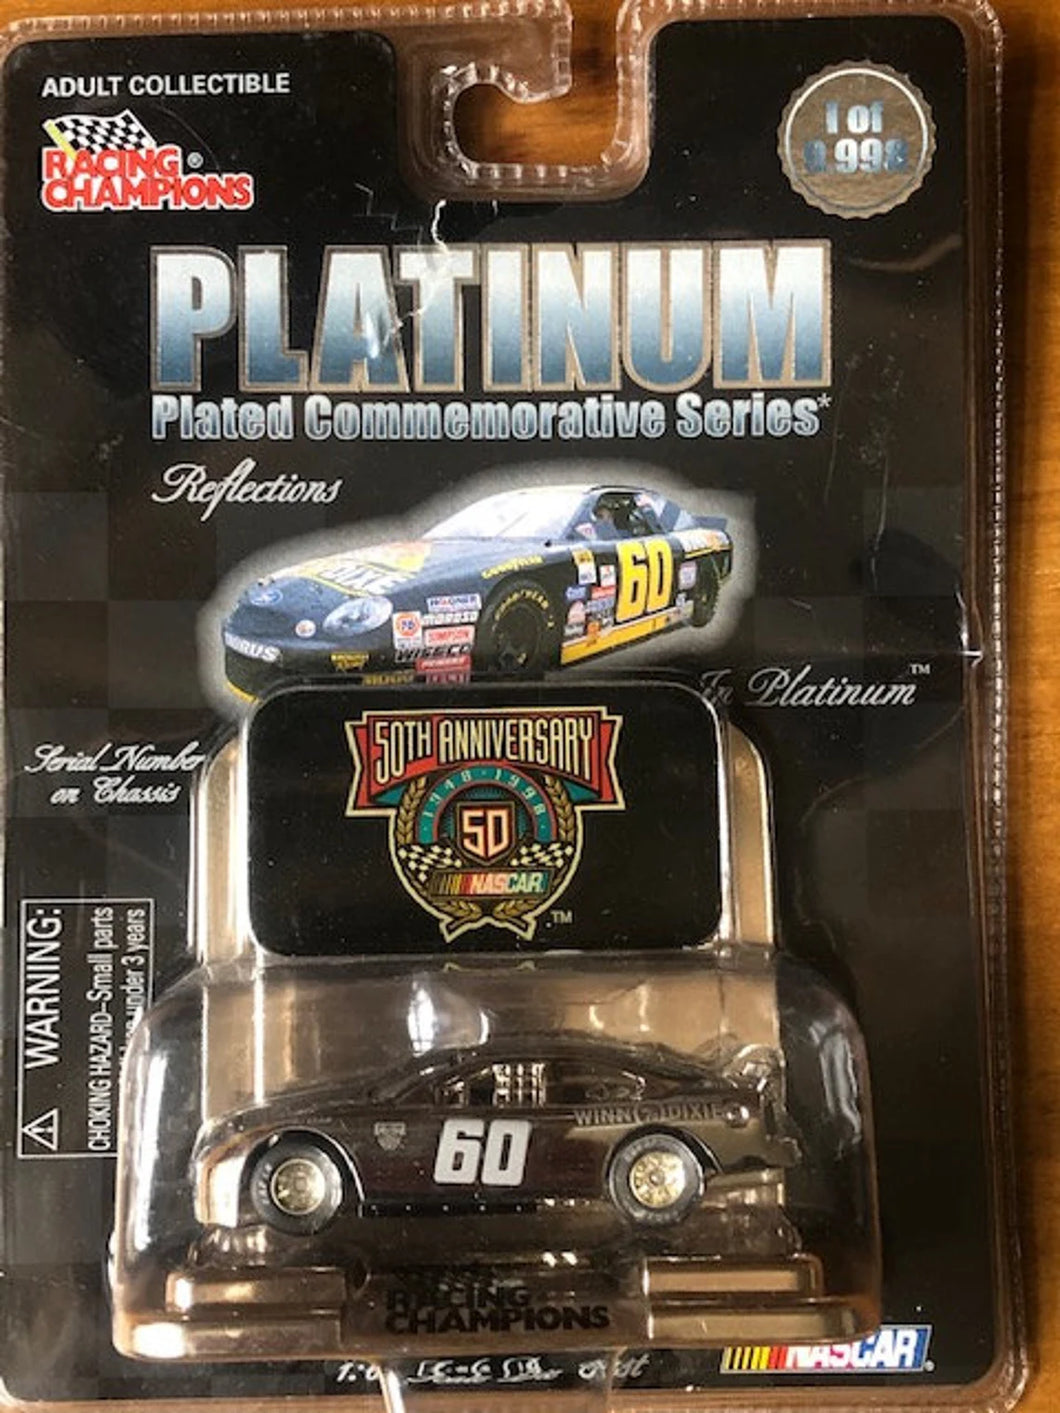 Racing Champions Platinum Plated Commemorative Series 50th Anniversary NASCAR Die Cast Winn Dixie Car #60